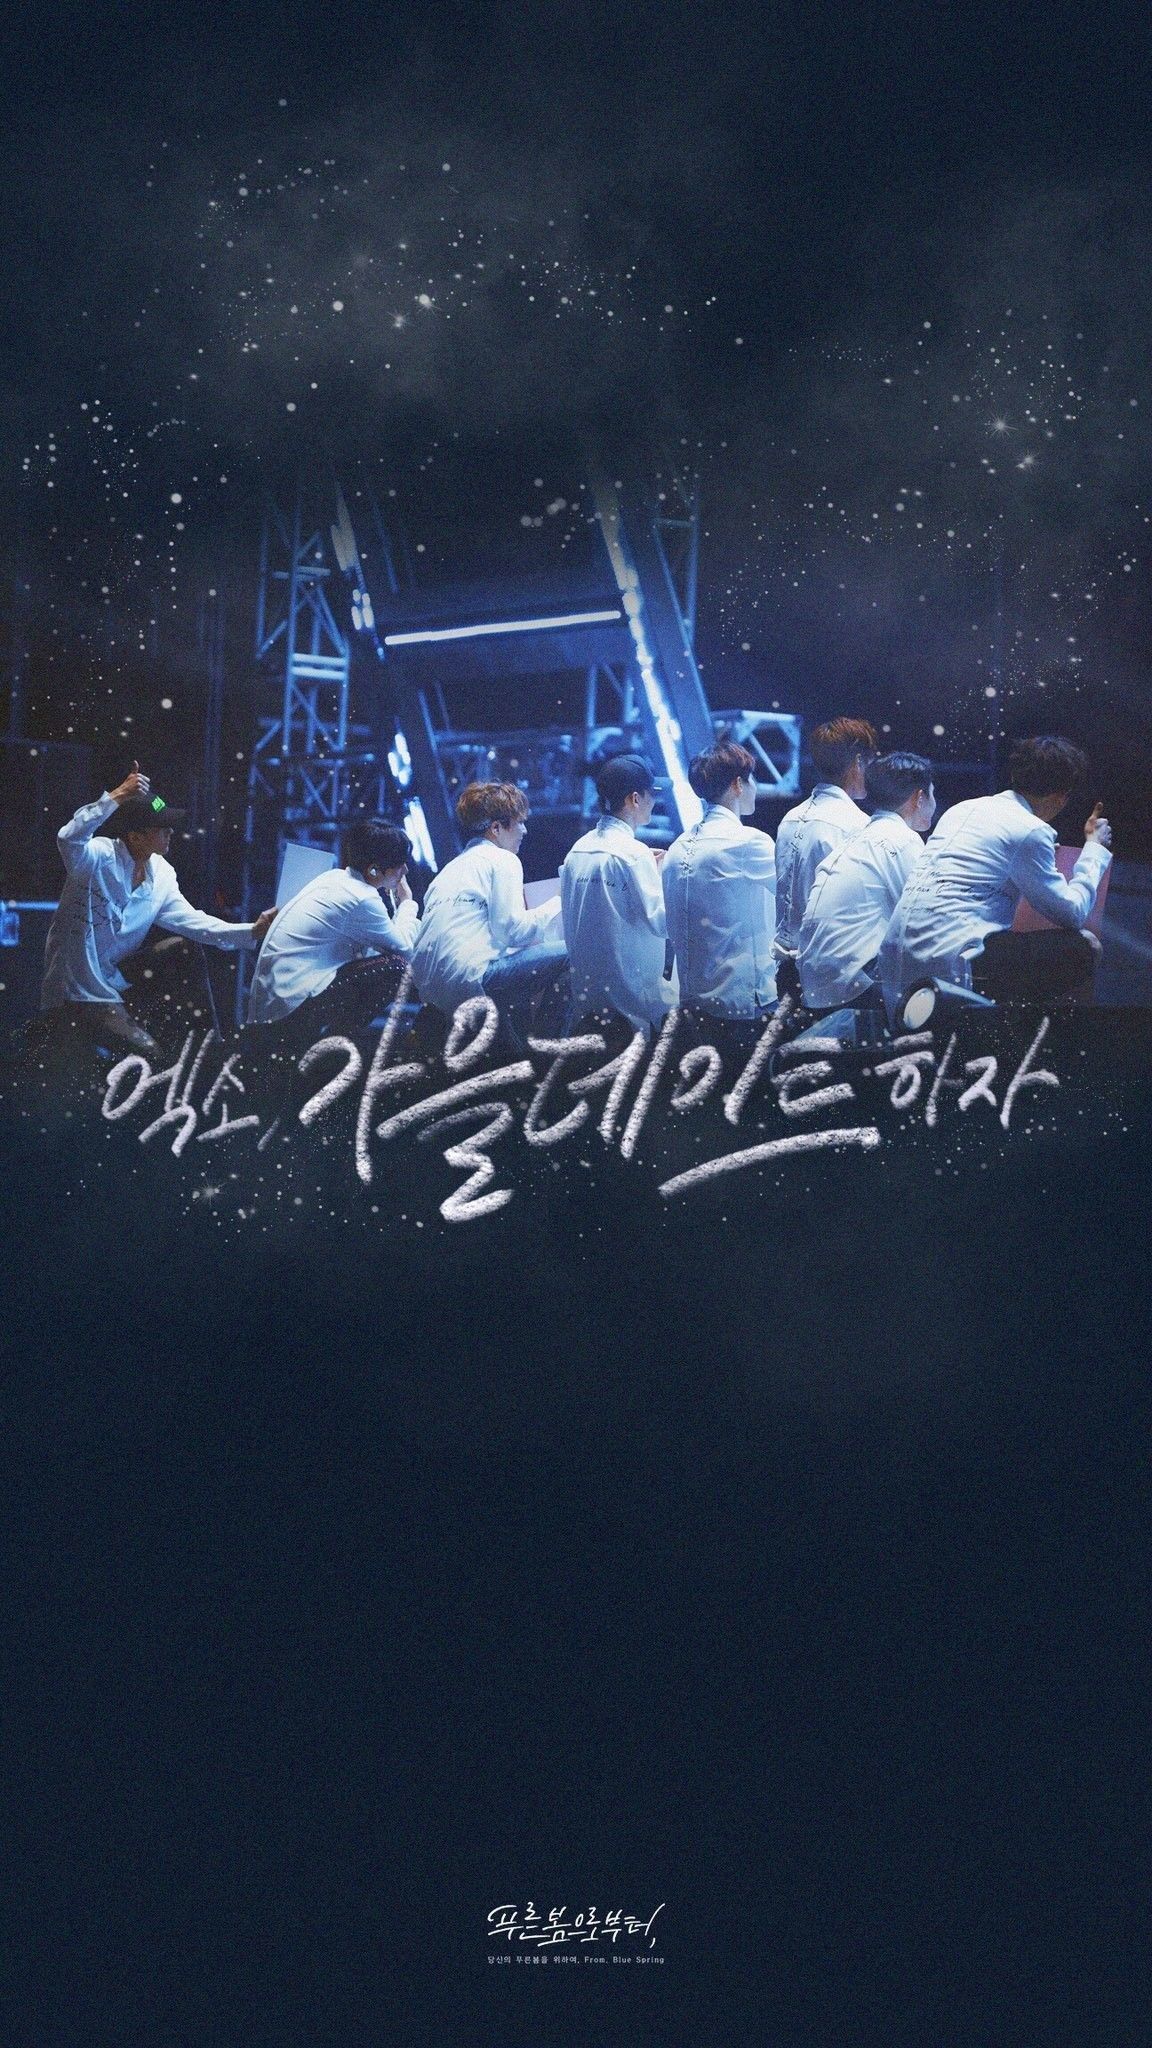 lock screen korean wallpaper iphone. Exo wallpaper hd, Exo, Exo concert